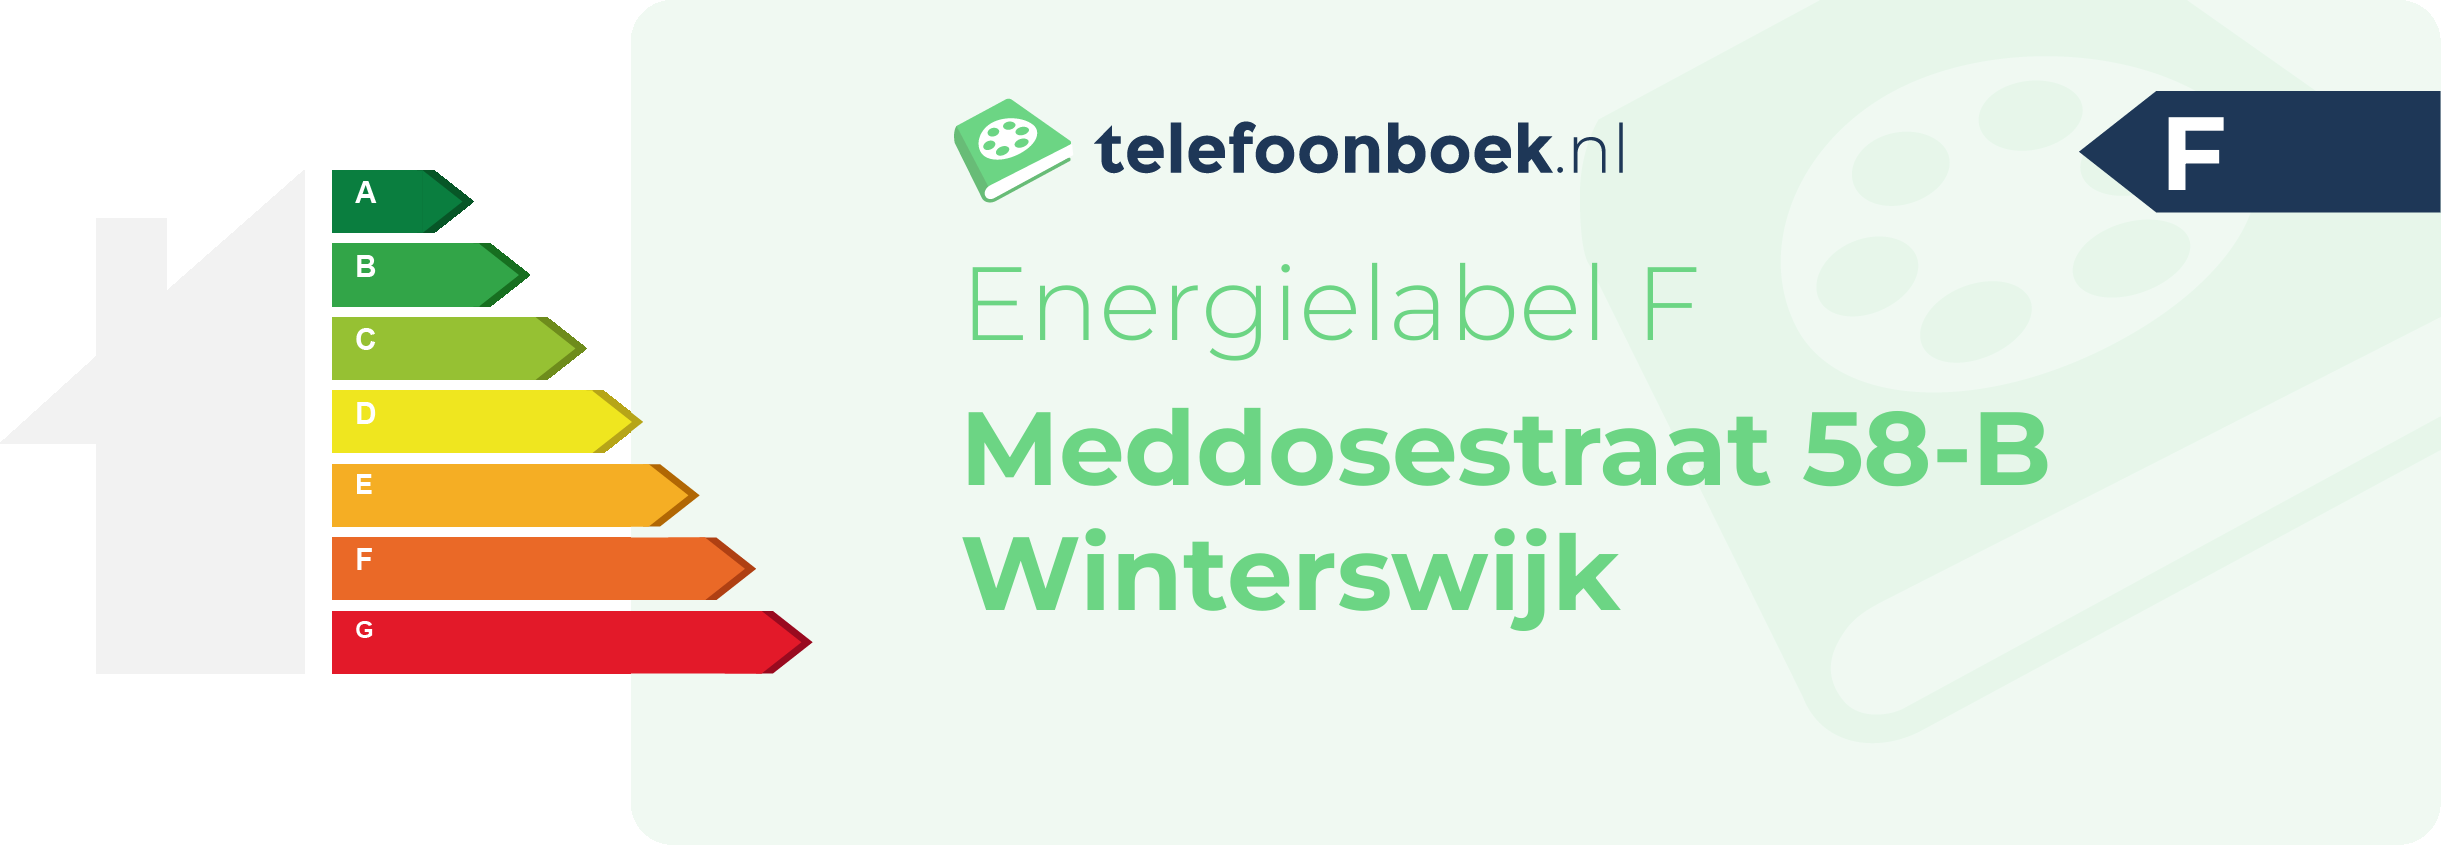 Energielabel Meddosestraat 58-B Winterswijk